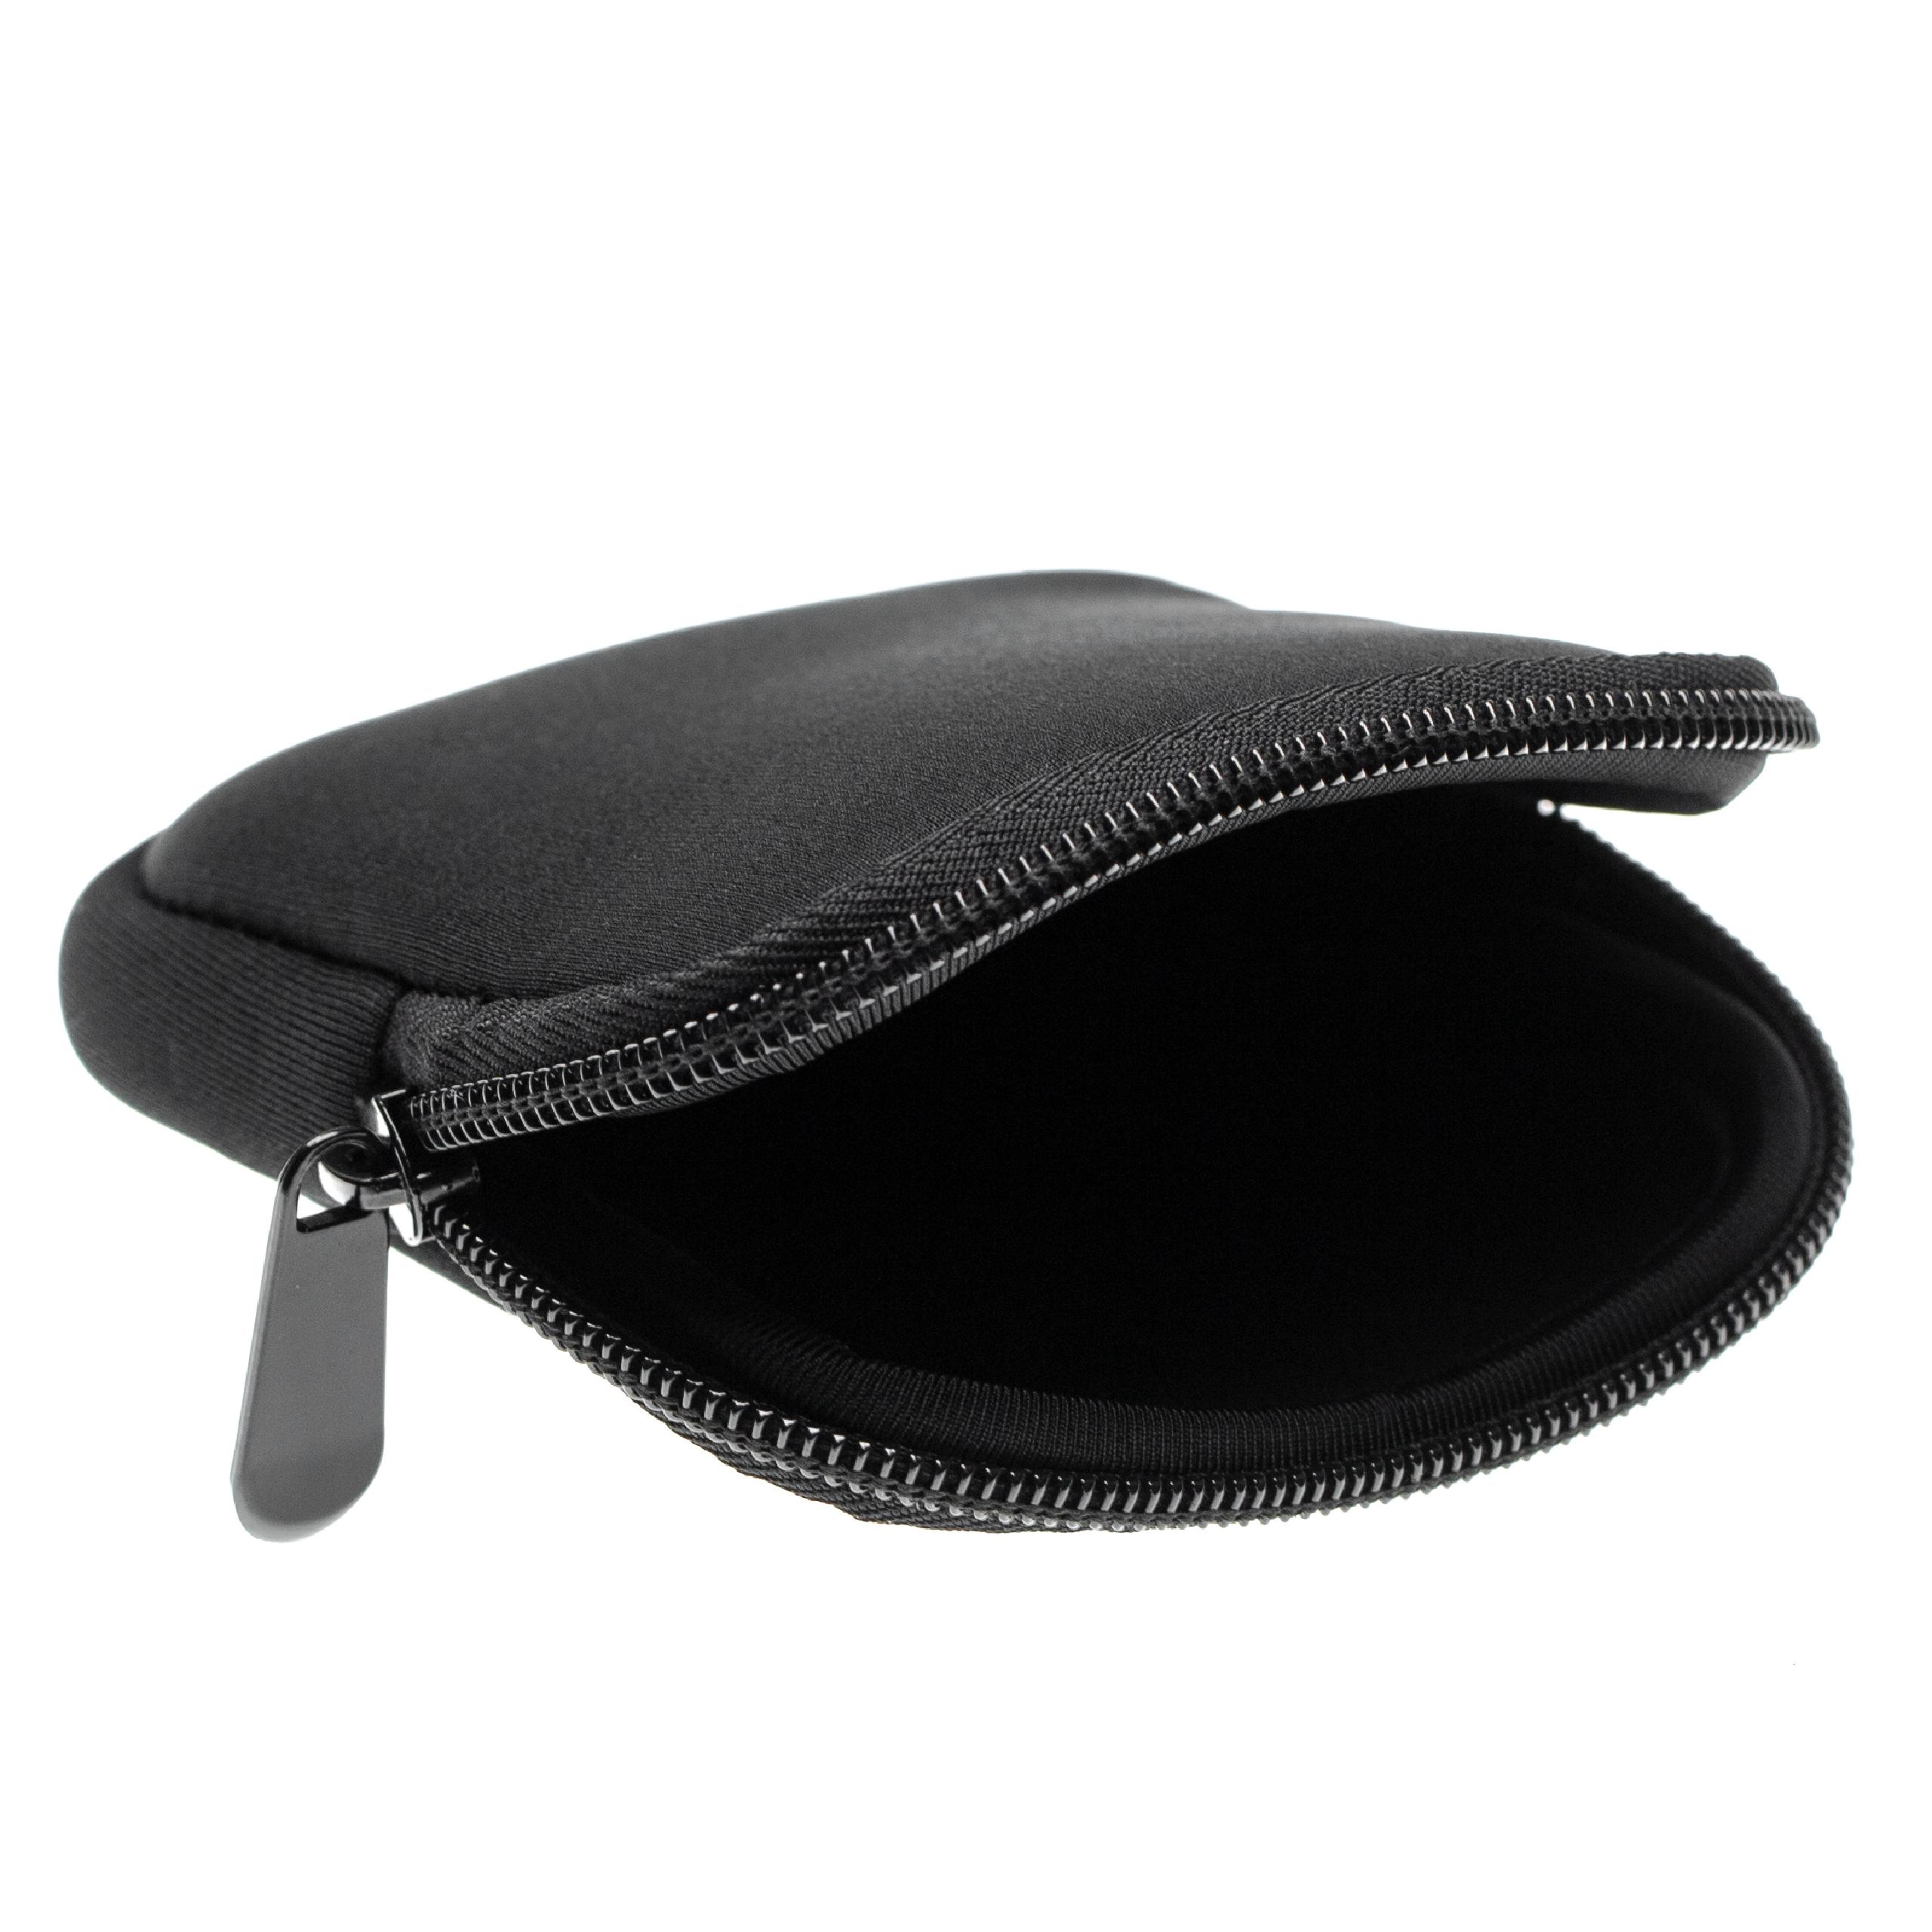 Transport Case suitable for Apple airPods Pro Headphones, Headset - Bag, neoprene, black